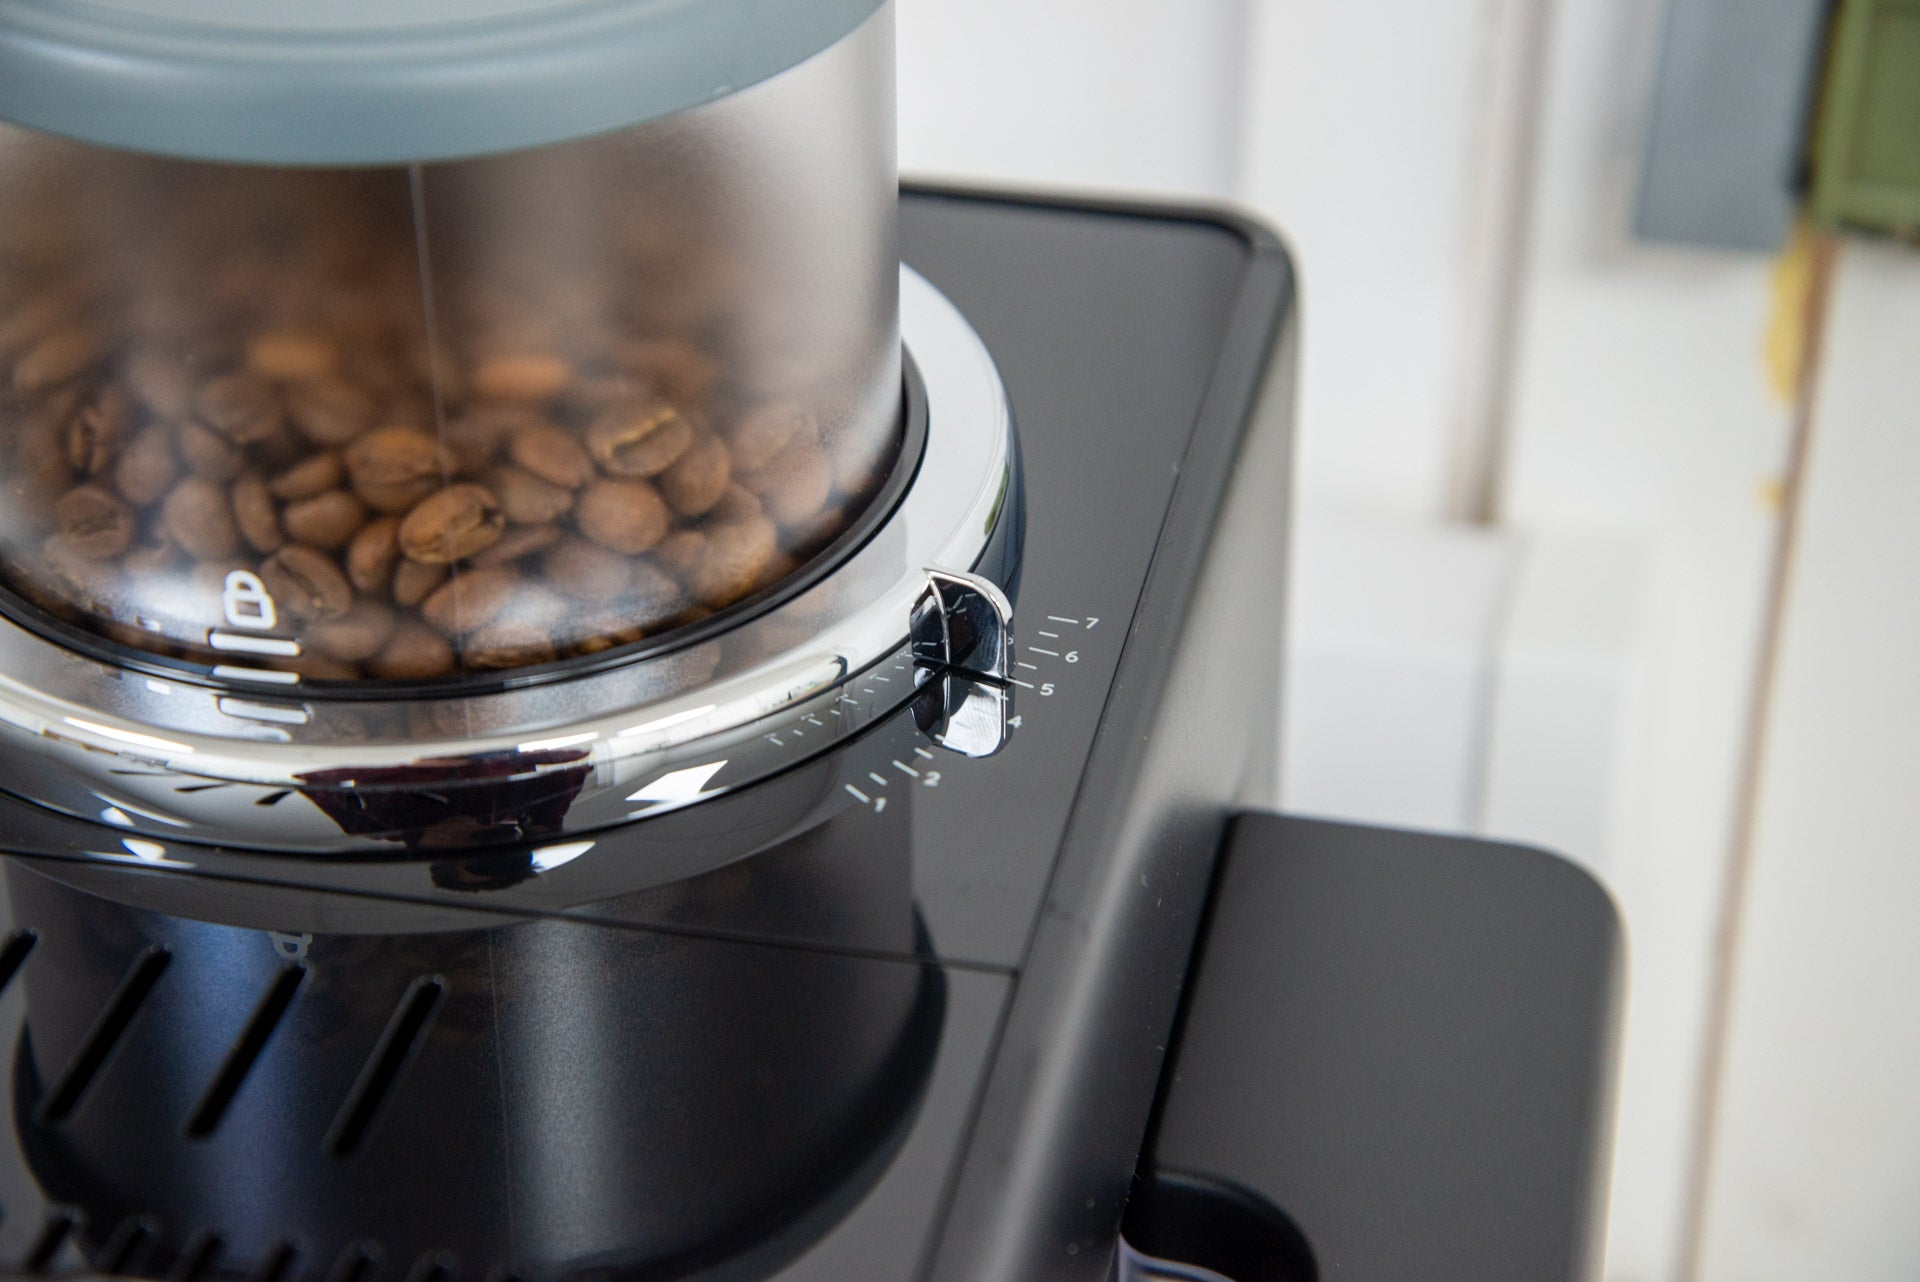 DeLonghi Rivelia Automatic Compact Bean to Cup Coffee Machine